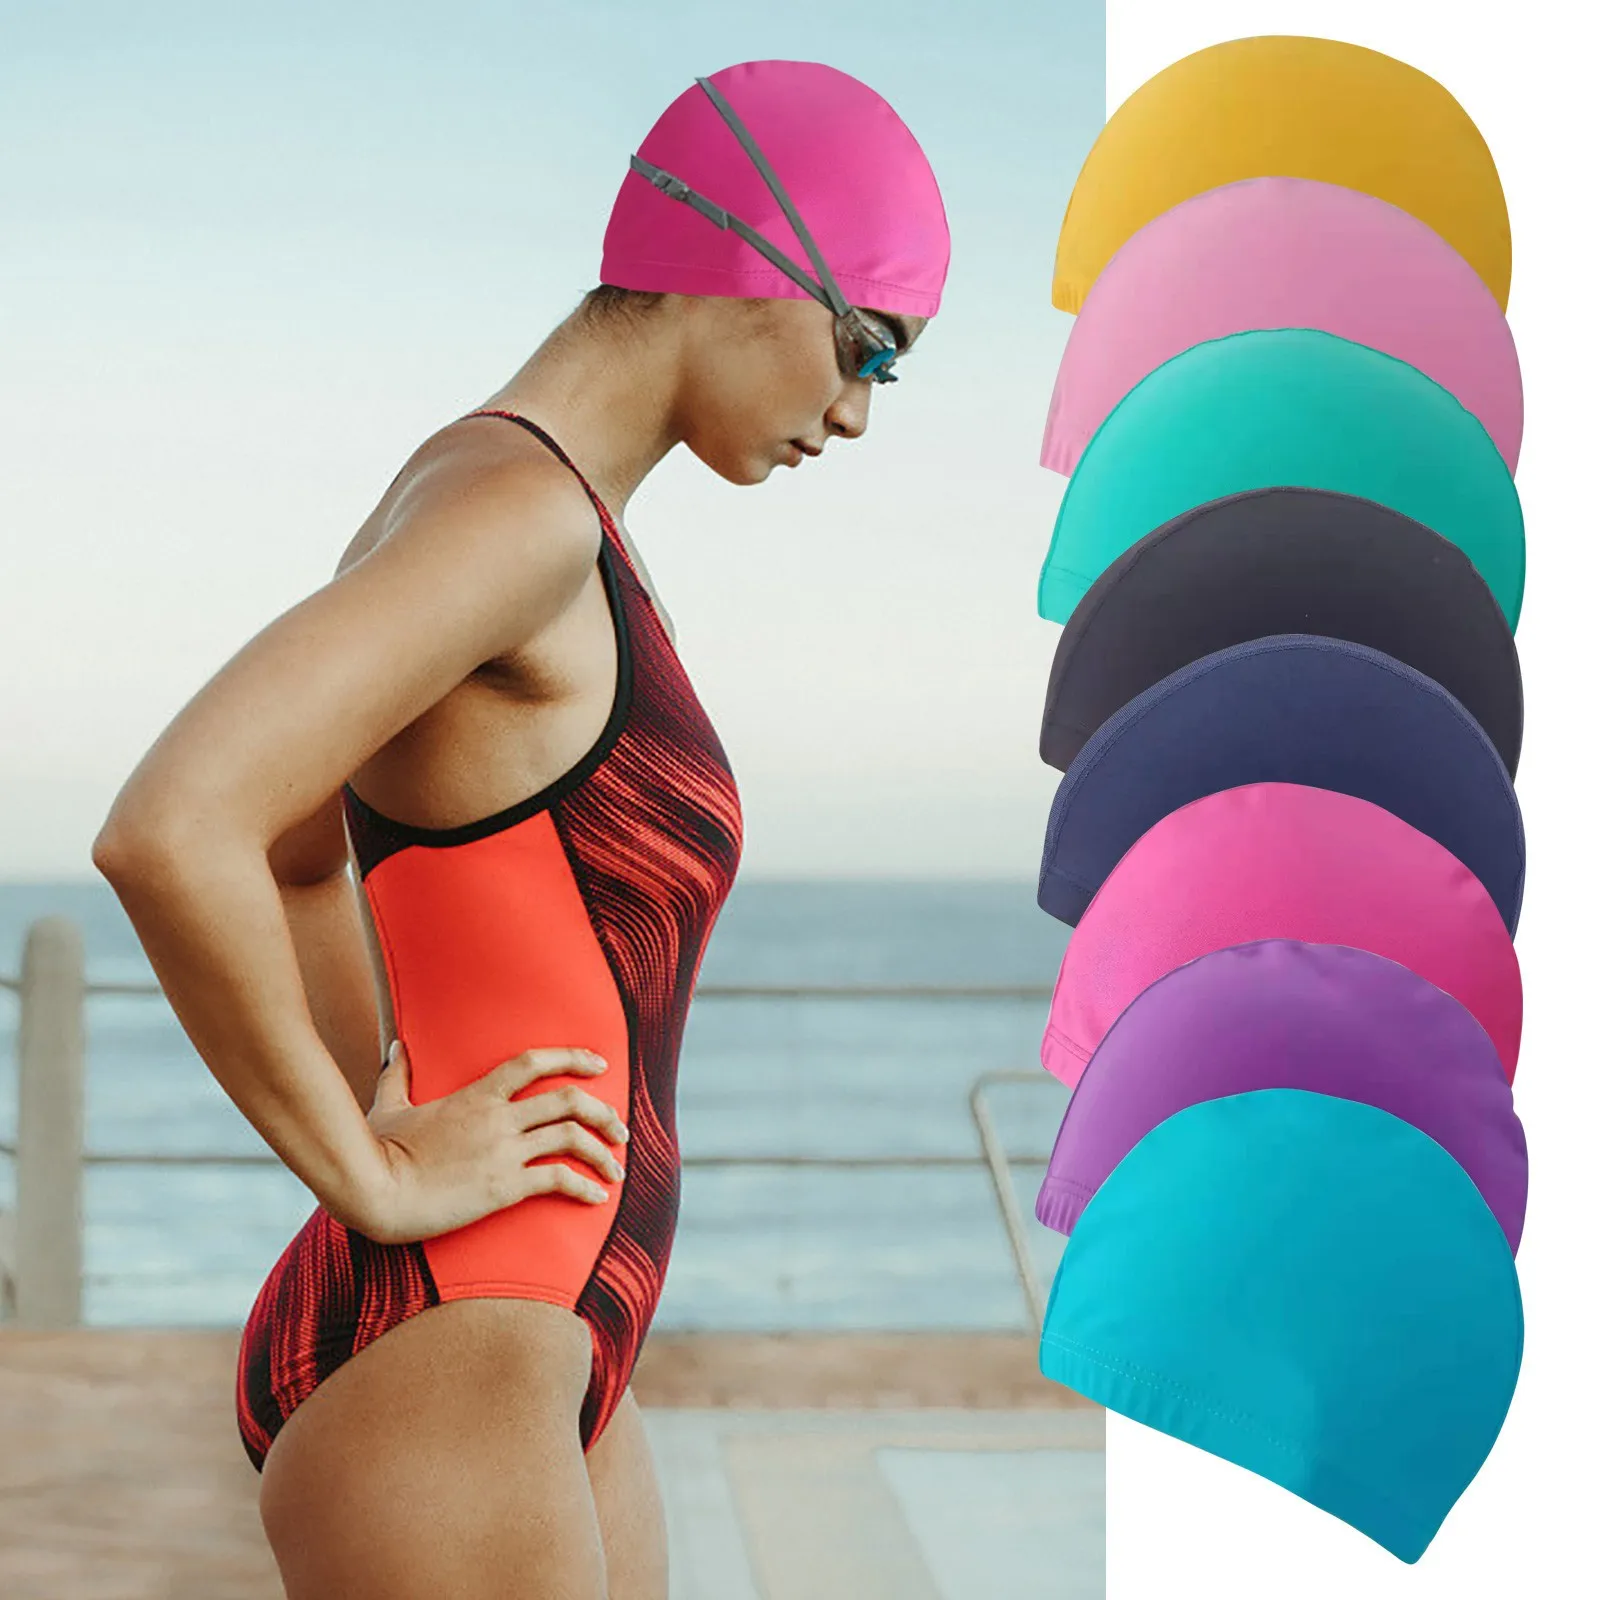 Elastic Swim Cap Swimming Pool Sport Waterproof PU Fabric Protect Ears Long Hair 